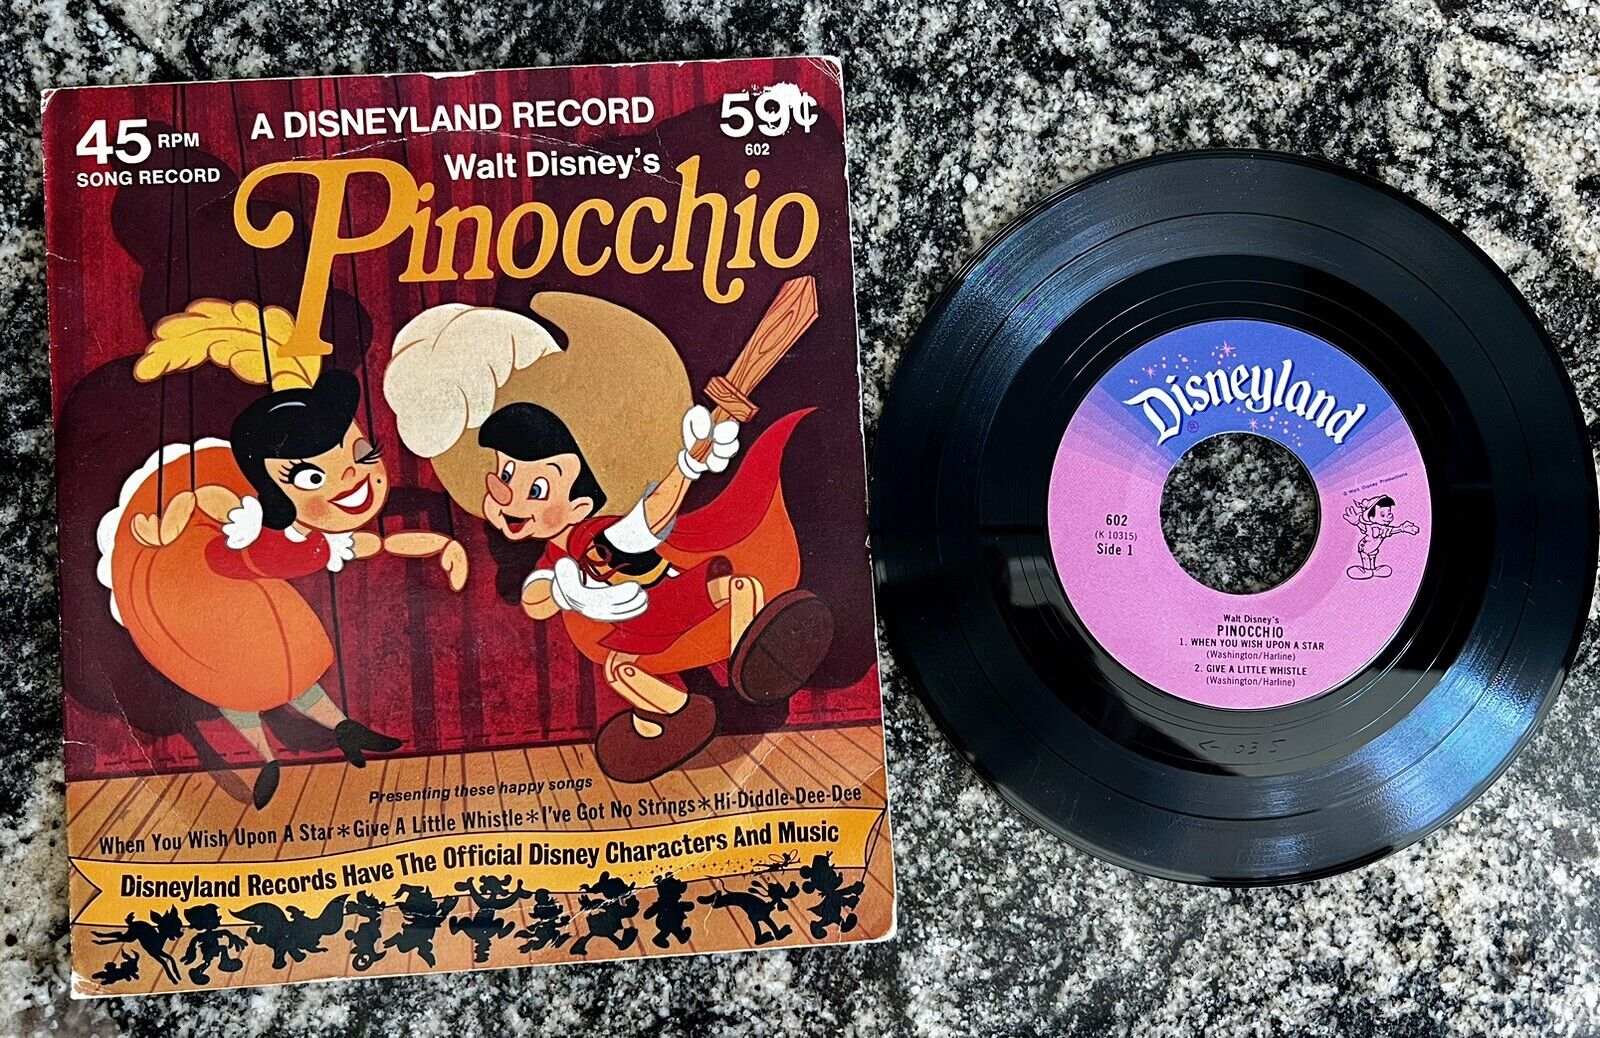 Walt Disney Pinocchio vinyl record 45RPM 602 4songs Vintage